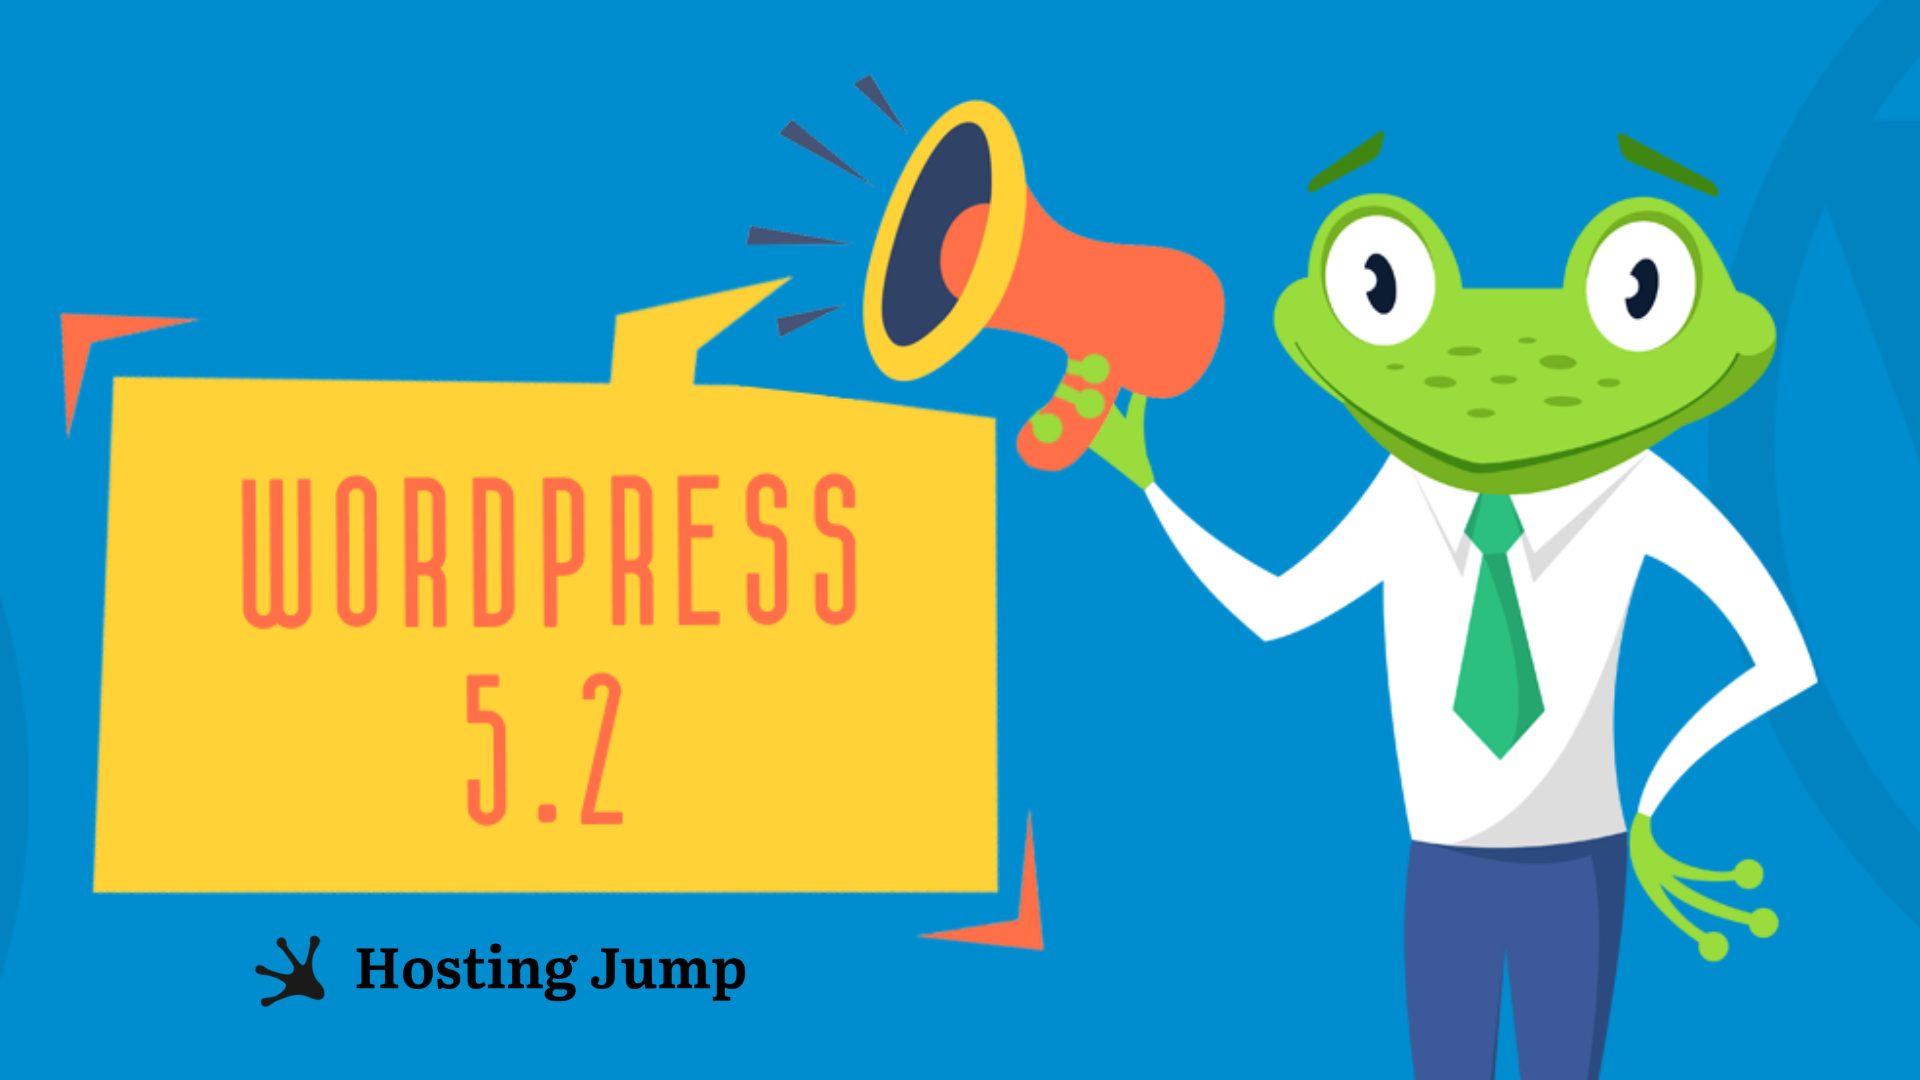 WordPress 5.2 "Jaco"